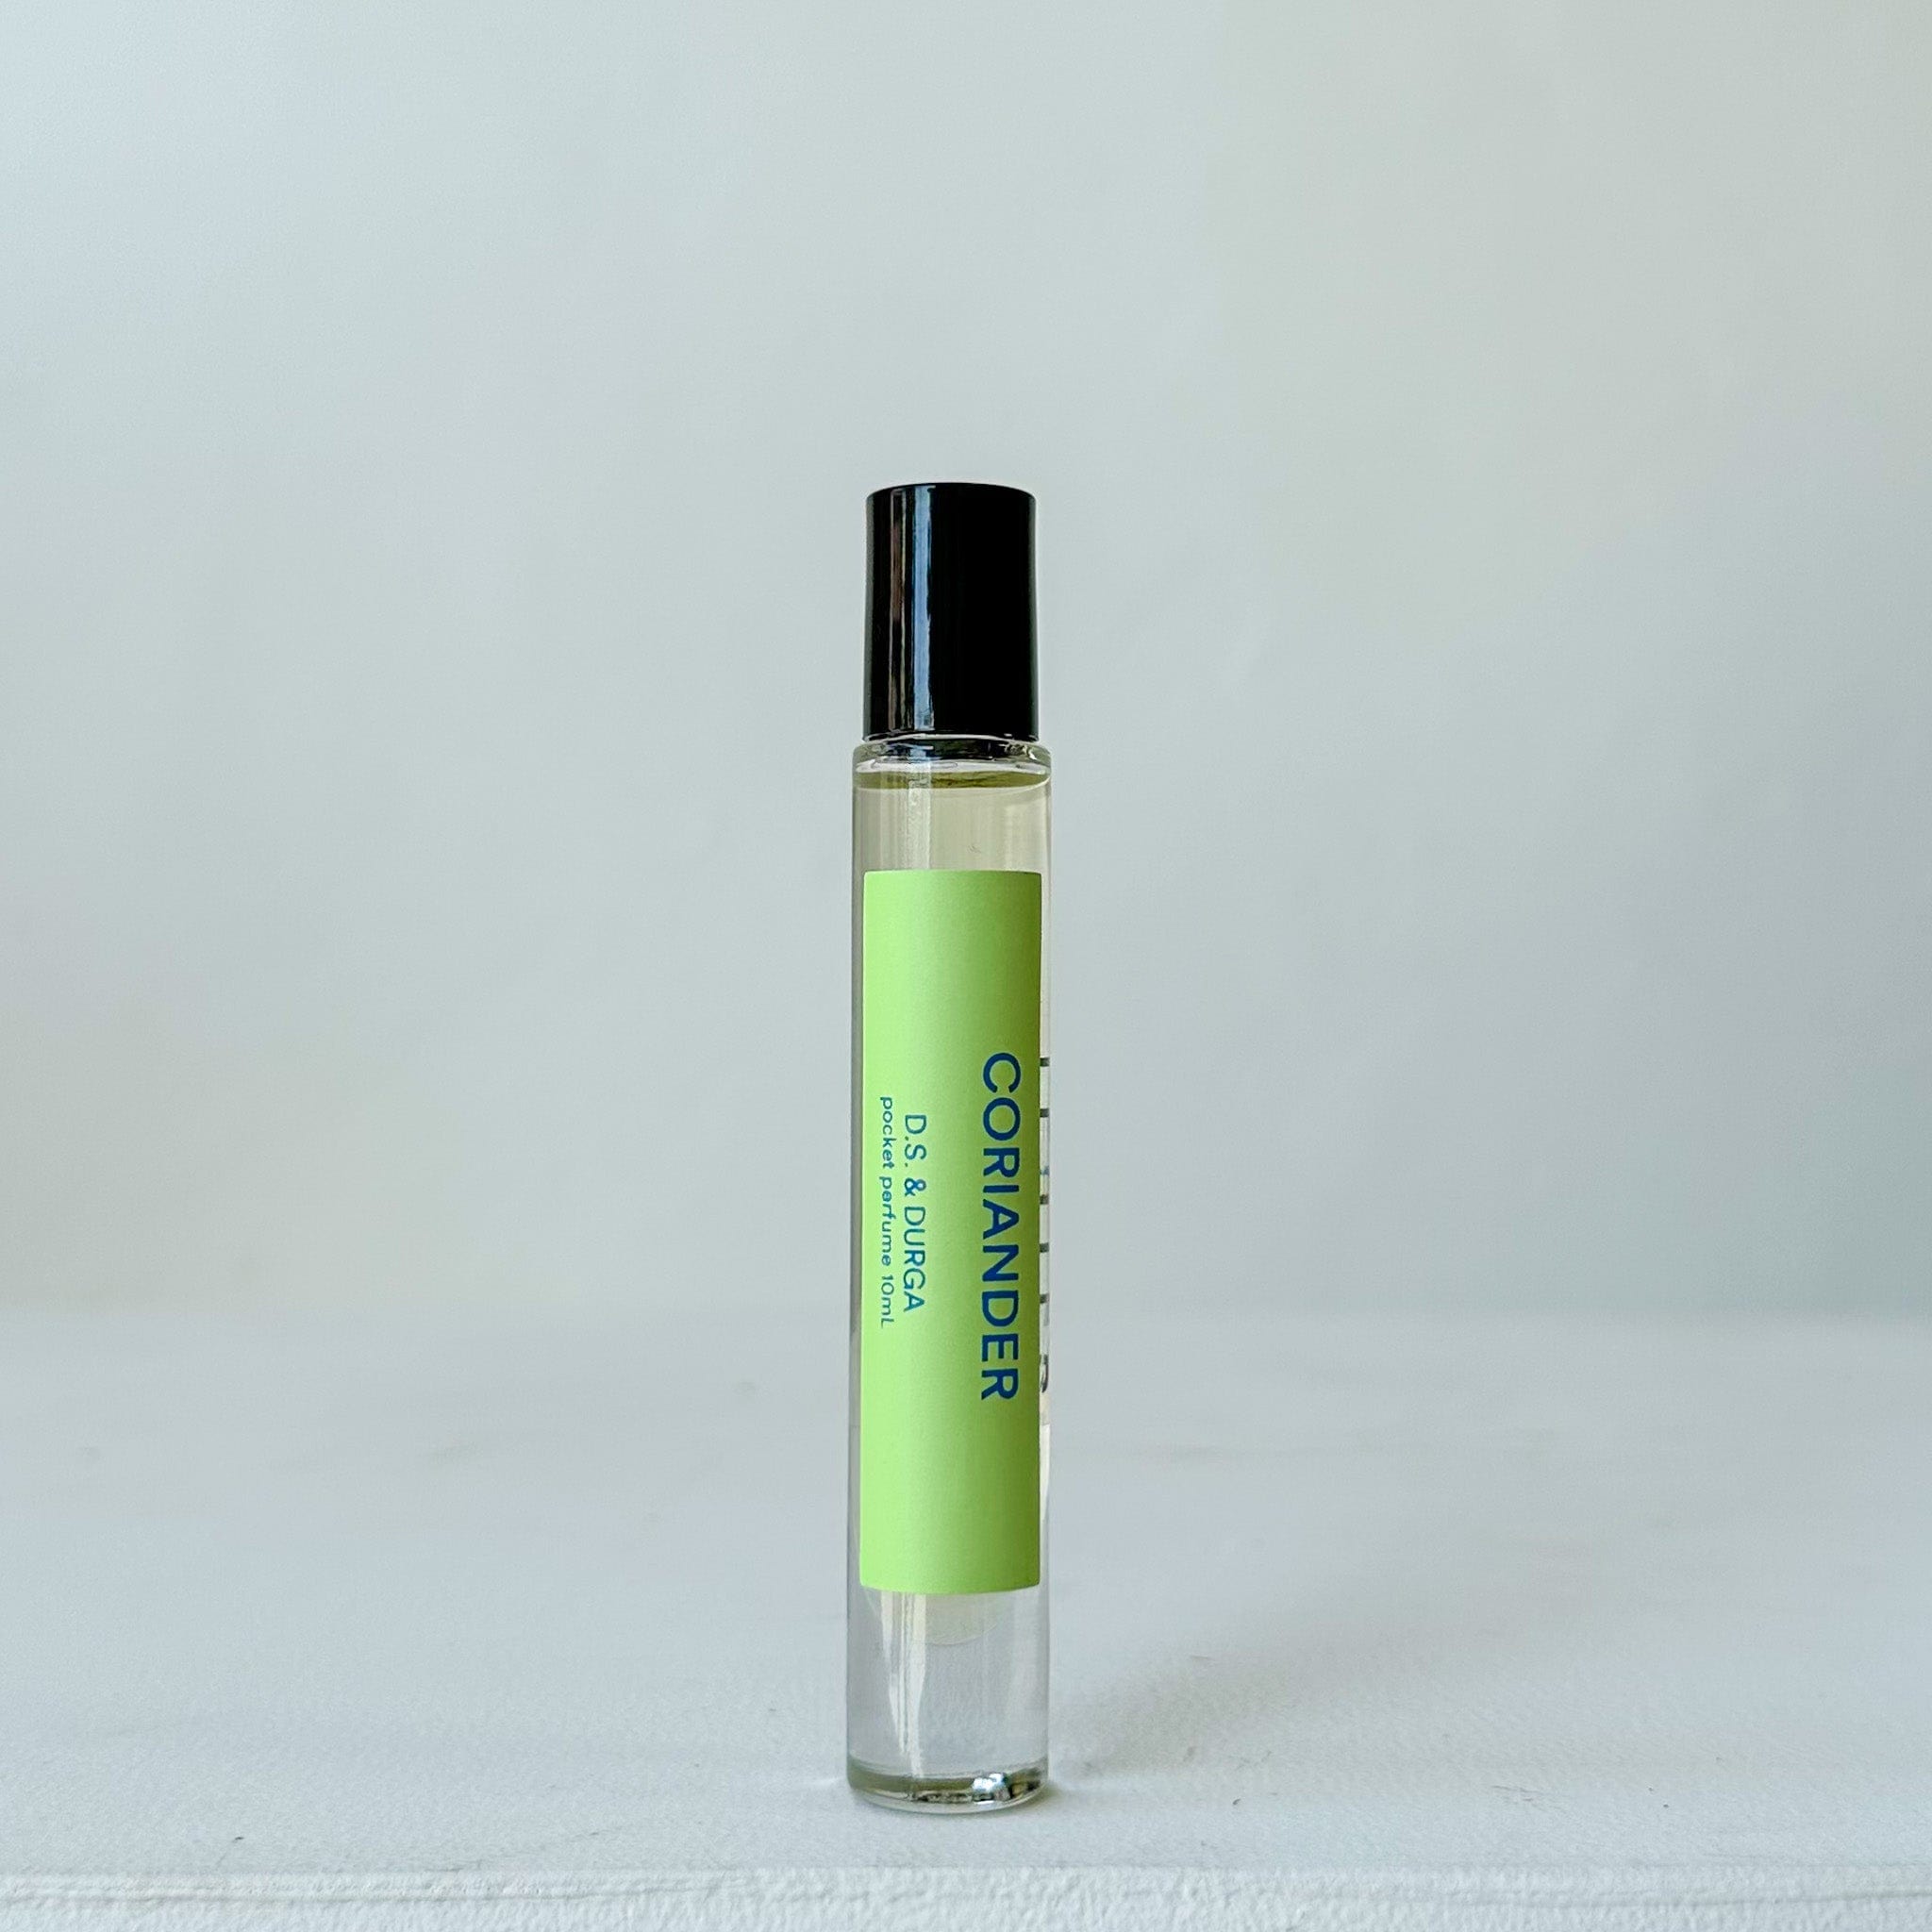 DS DURGA Apothecary Coriander: D.S. & DURGA Pocket Perfume Oil